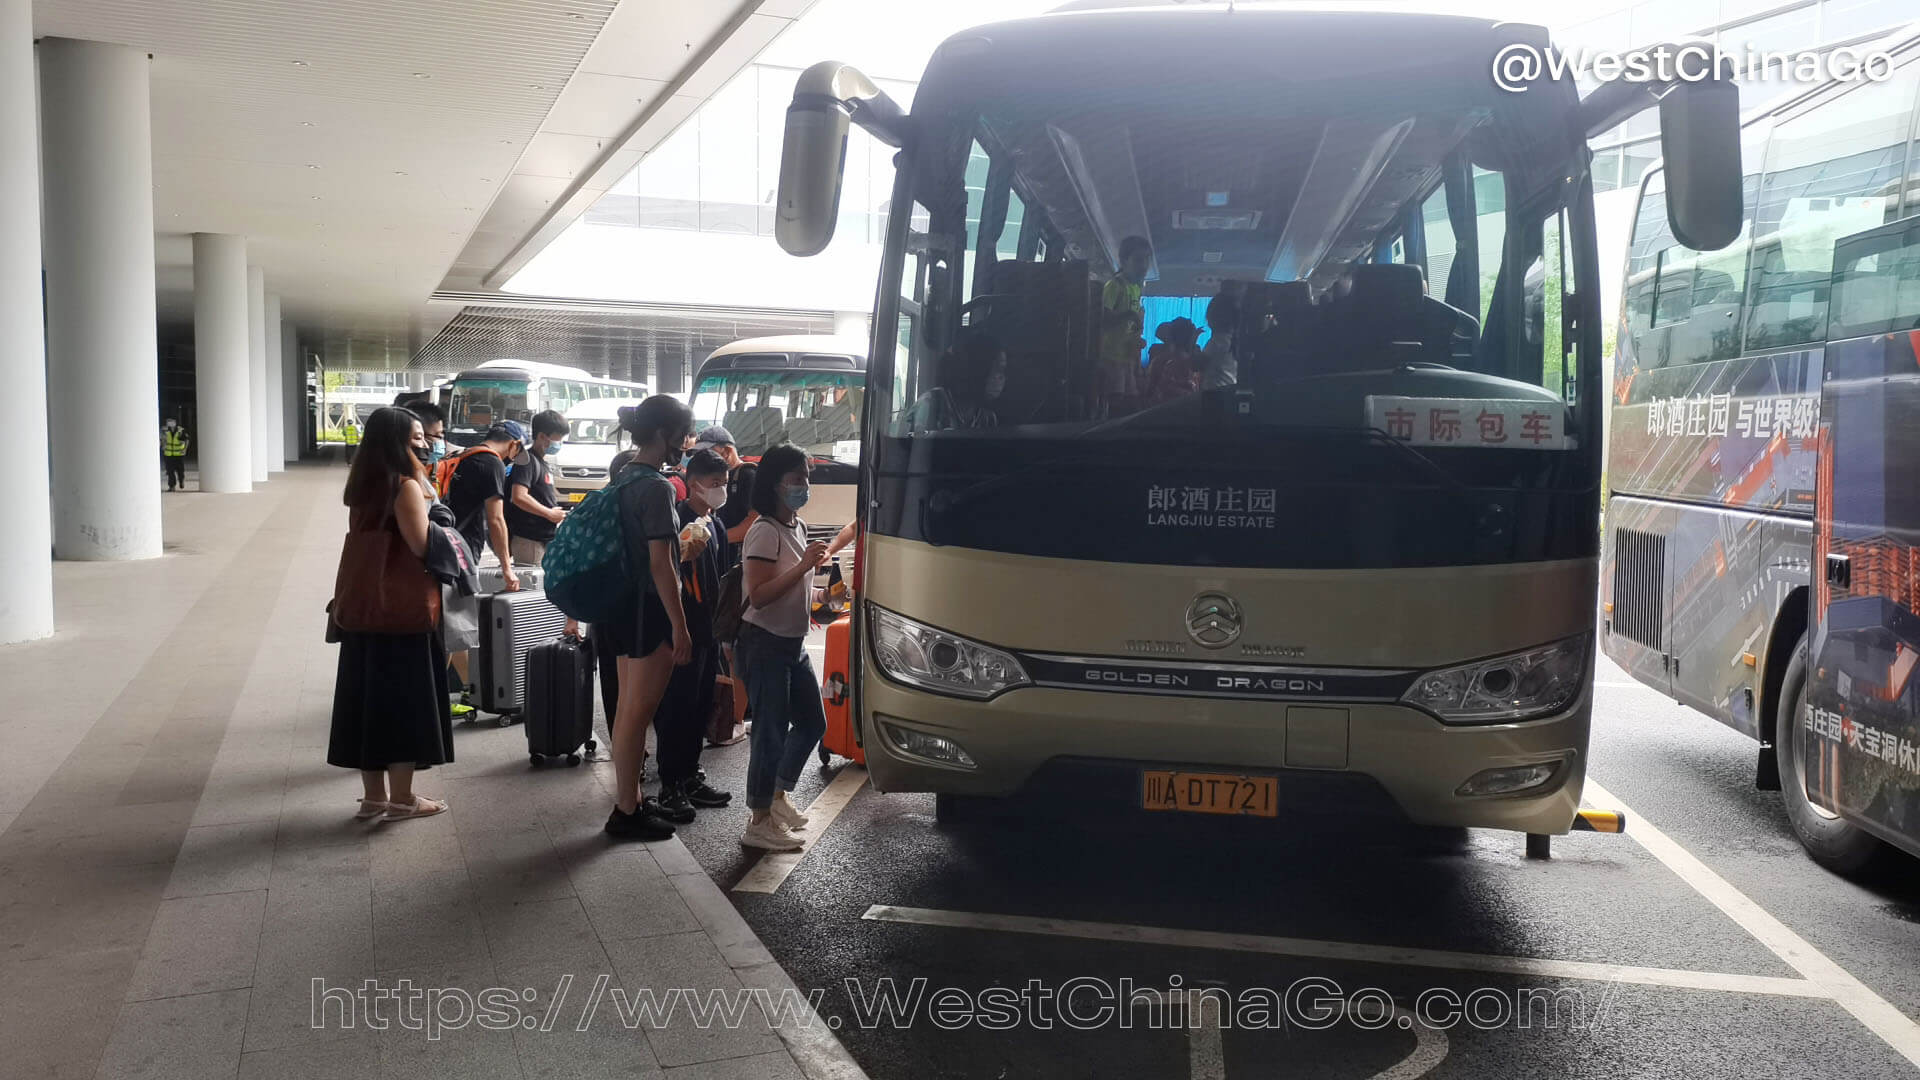 Chengdu Tianfu International Airport Transfer